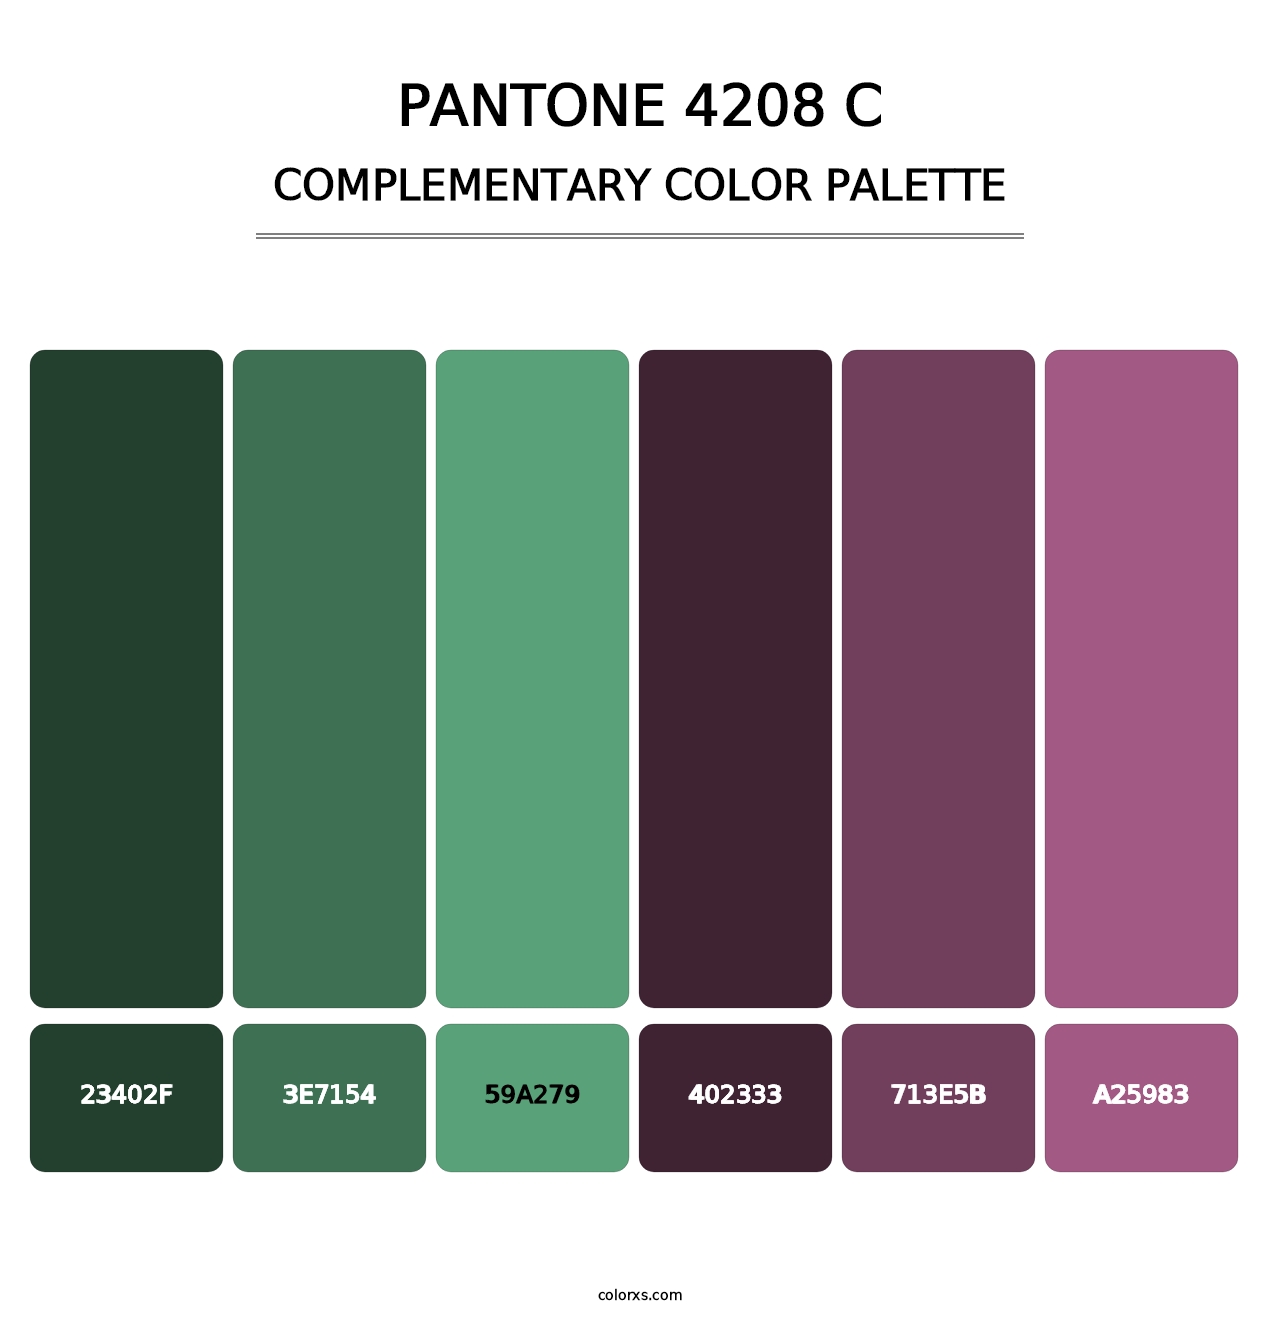 PANTONE 4208 C - Complementary Color Palette